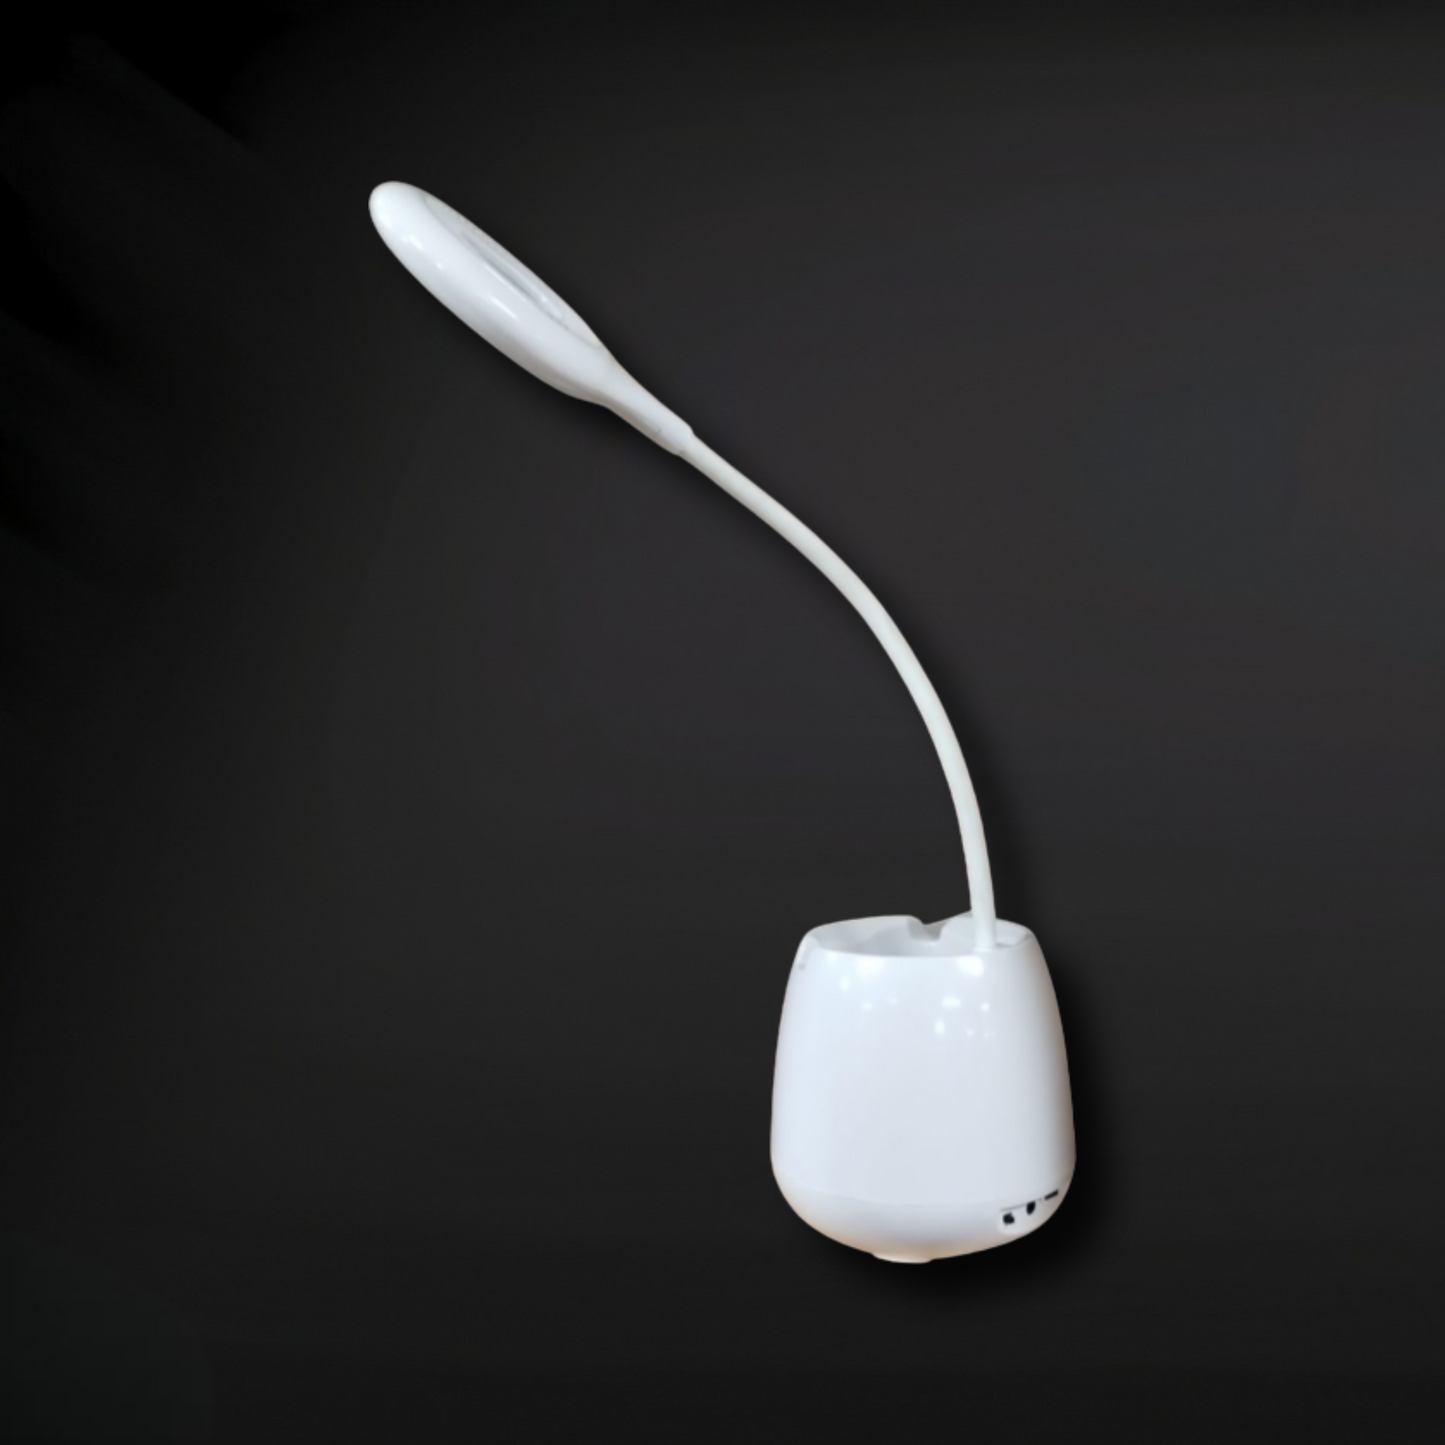 Bluetooth Speaker Flower Pot/Stationery Holder with Phone Holder and LED Light/Lamp Zack Wholesale